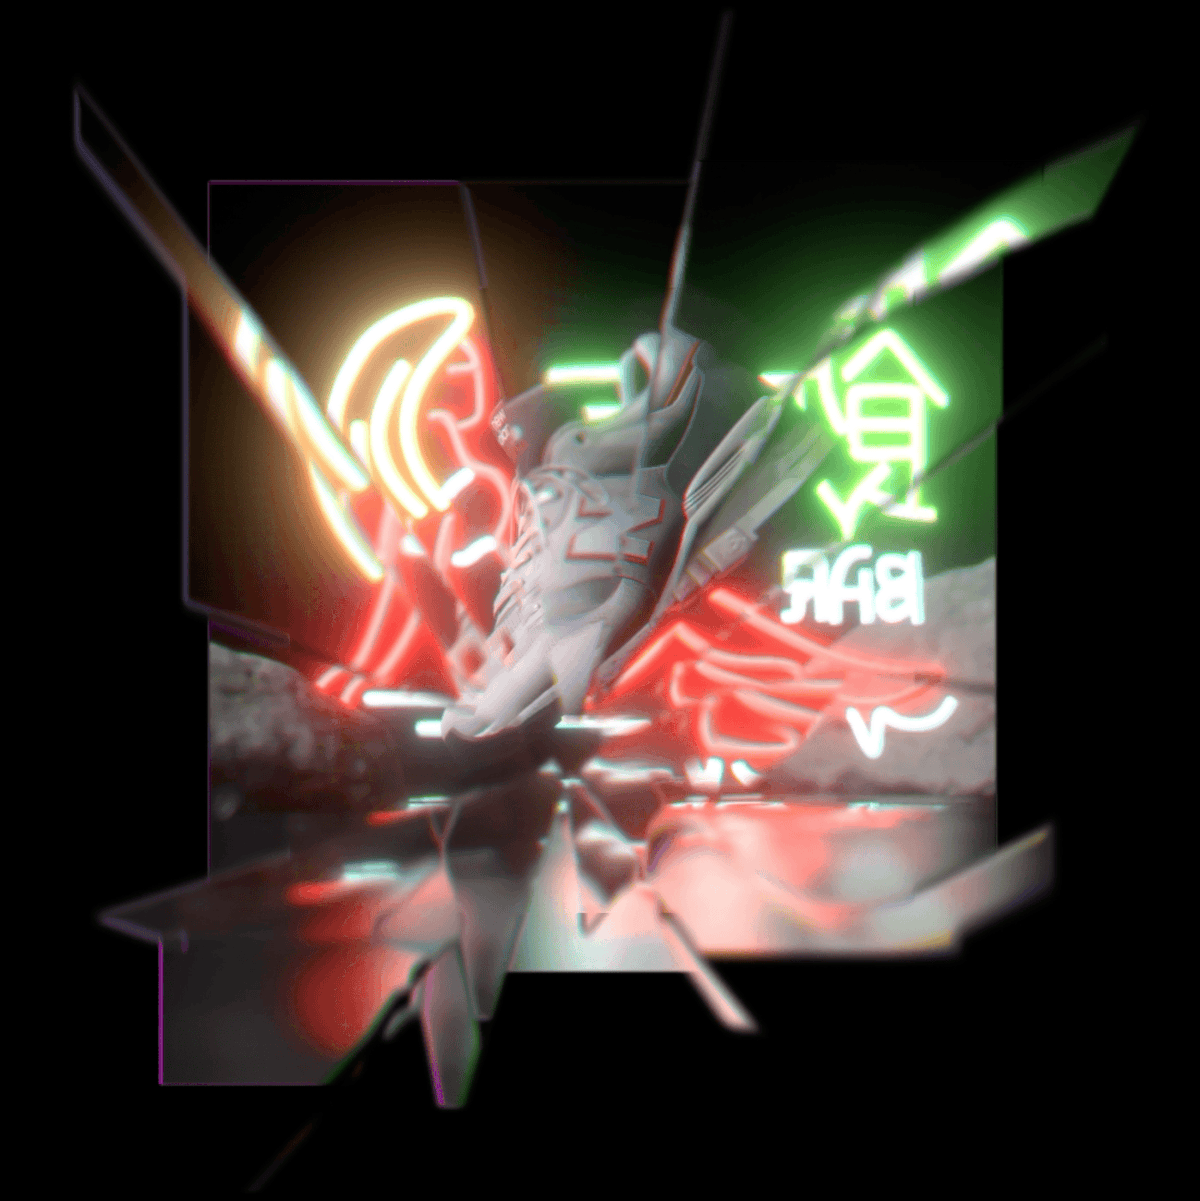 3D animation  blender composition conseptual lizard neon neon sign New Balance tokyo